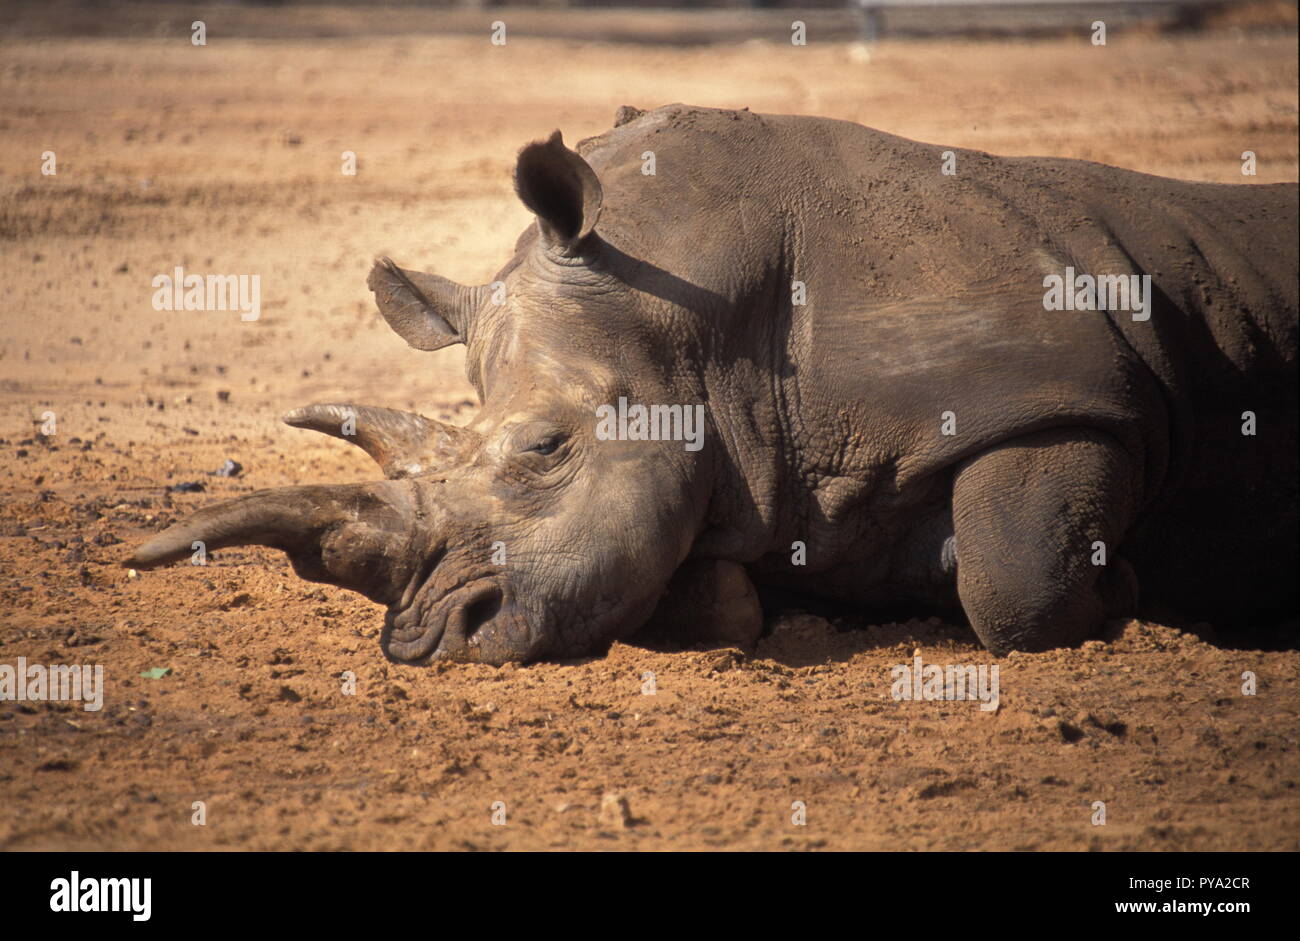 Rhinoceros, Rhino with mud Stock Photo